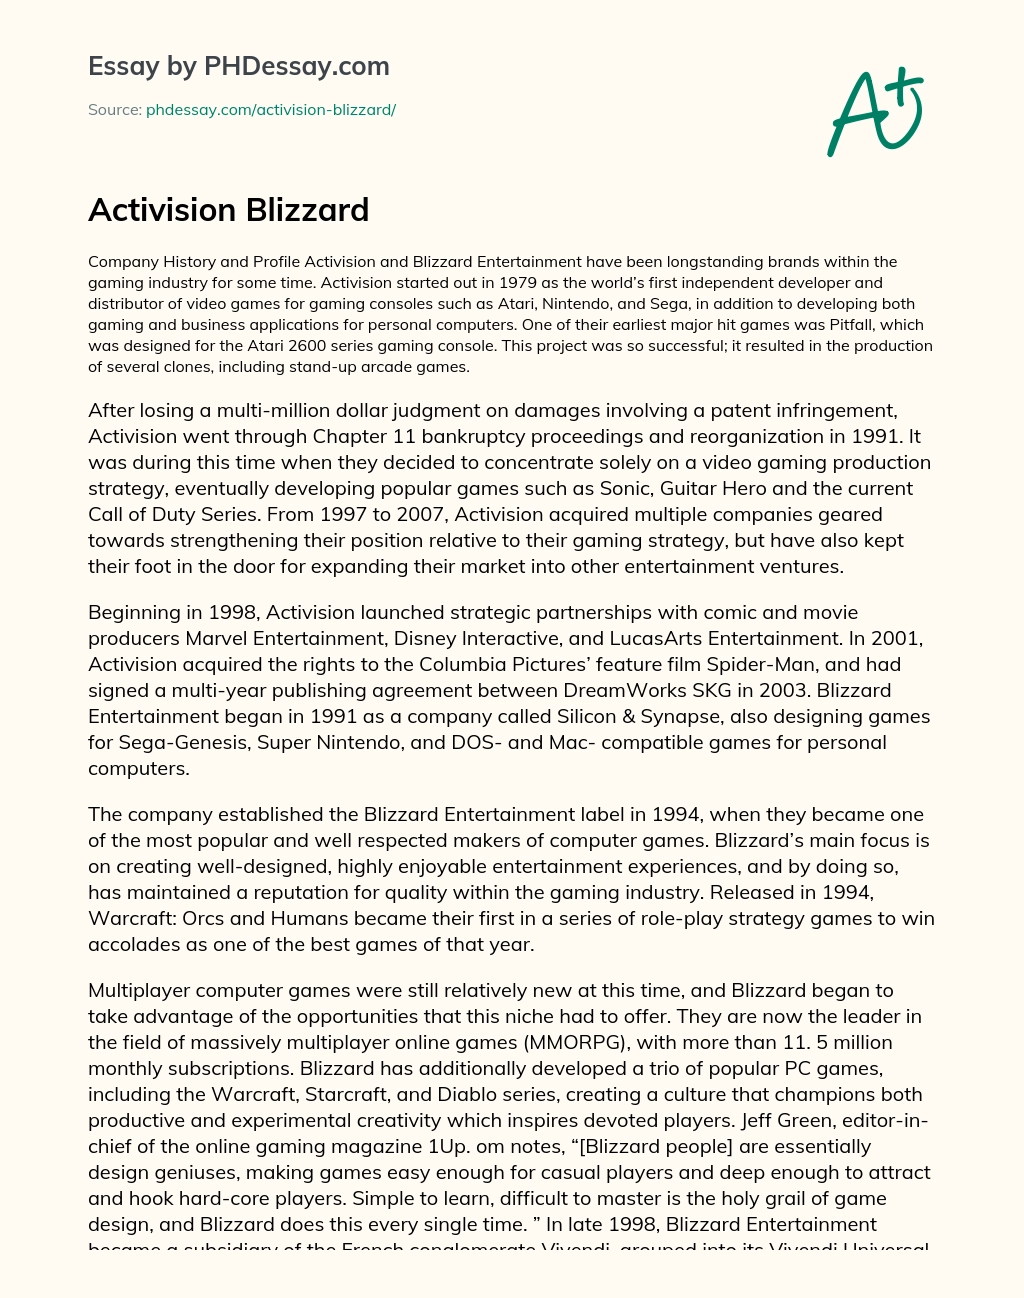 Activision Blizzard essay